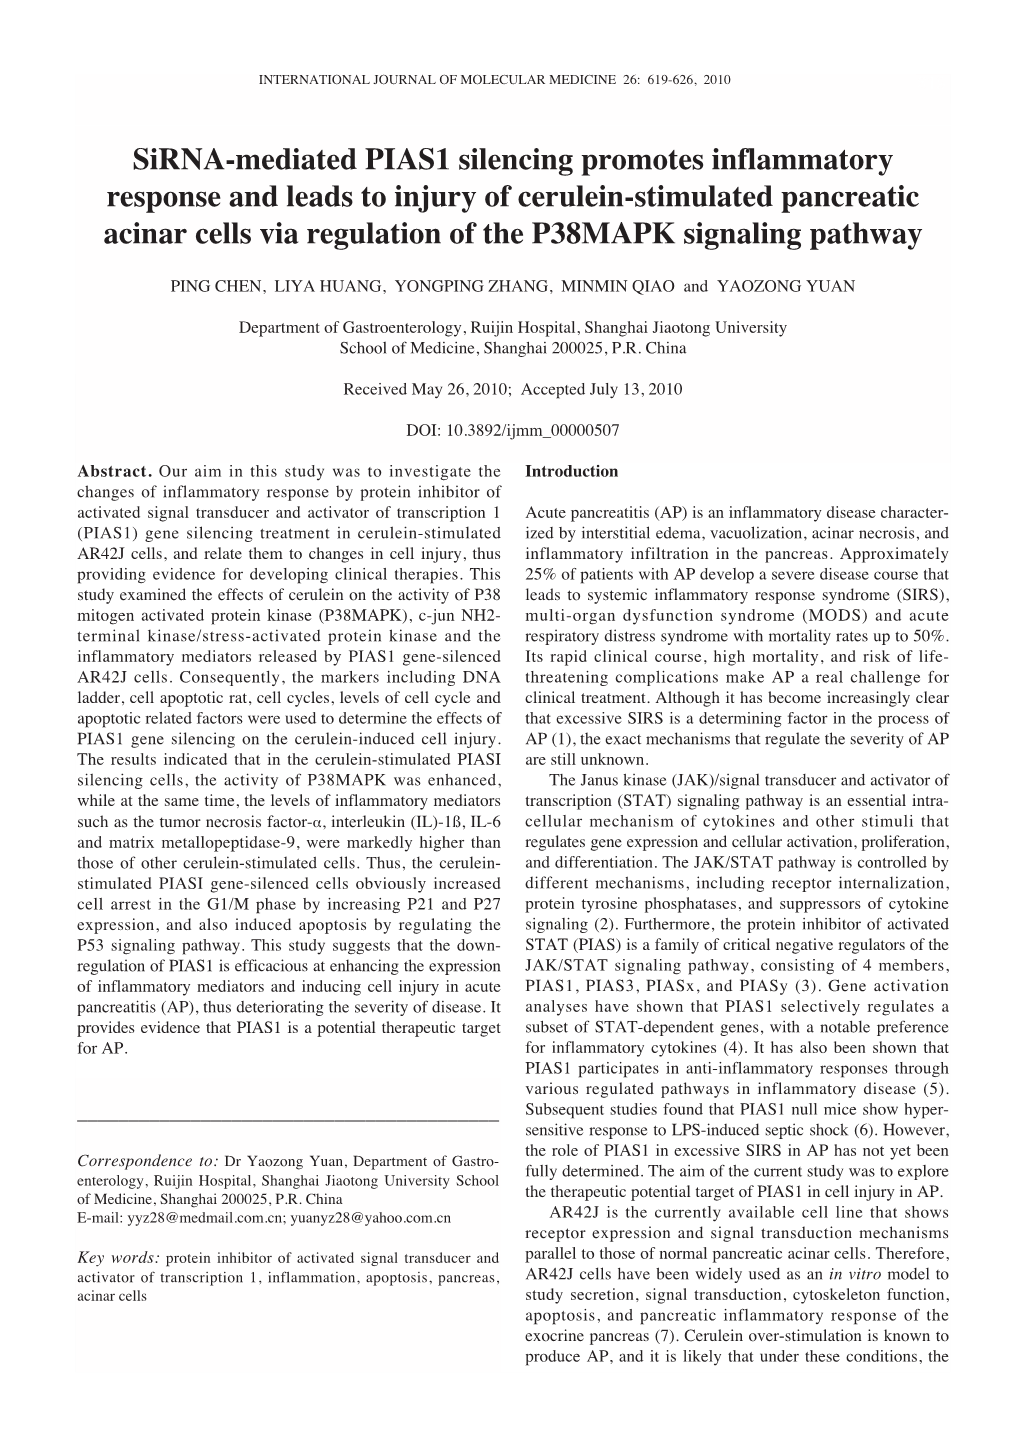 Sirna-Mediated PIAS1 Silencing Promotes Inflammatory Response